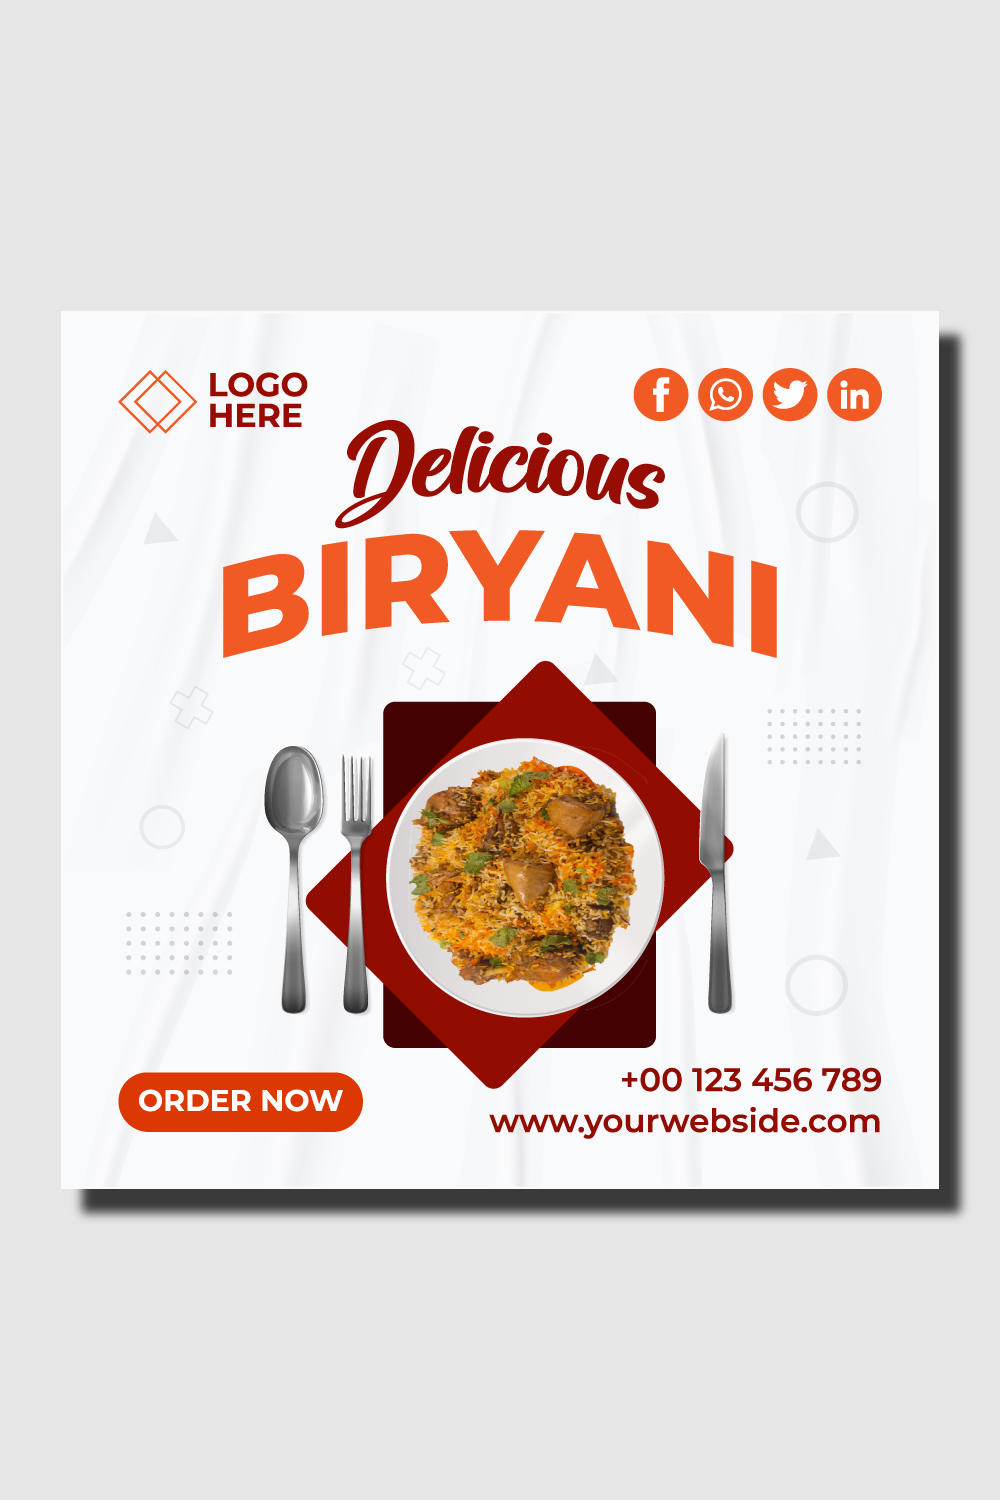 Delicious Biryani- social media post pinterest preview image.